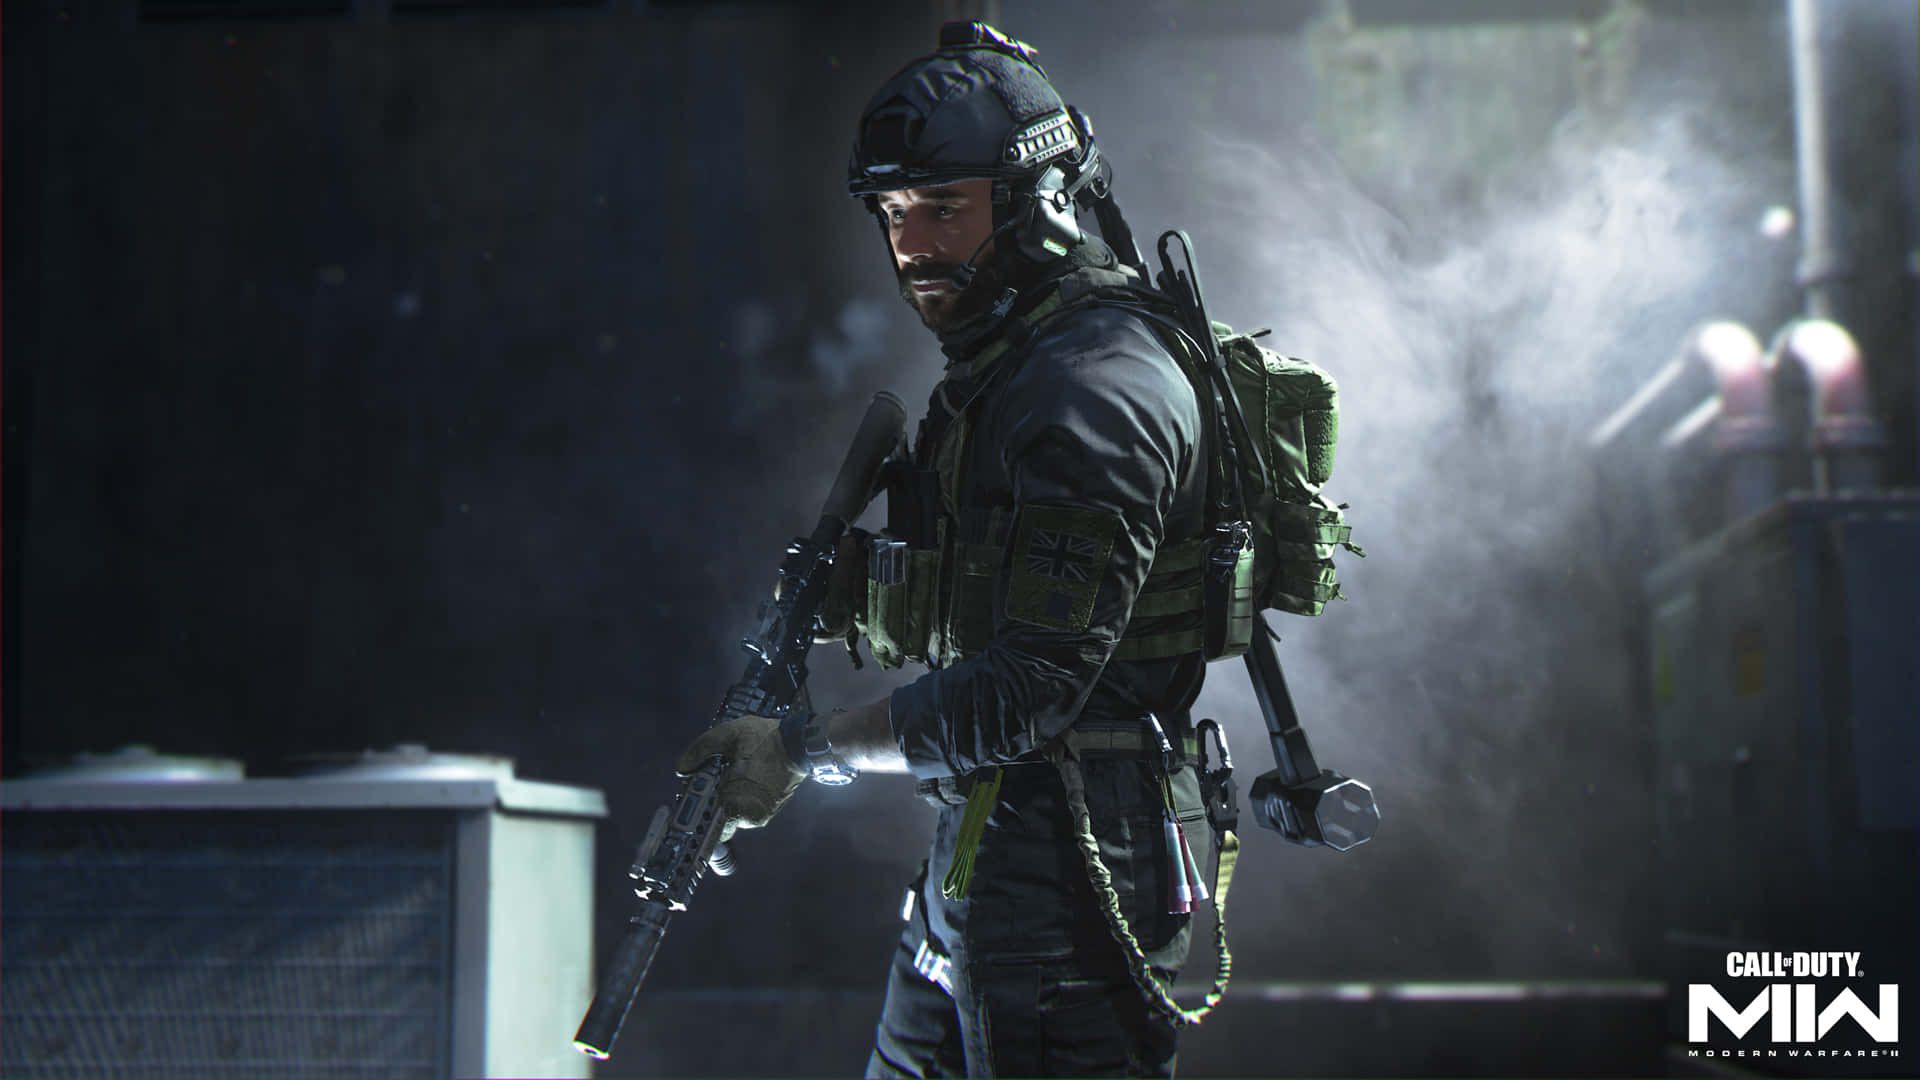 Tag op på våbene i Call of Duty Modern Warfare 4 Wallpaper